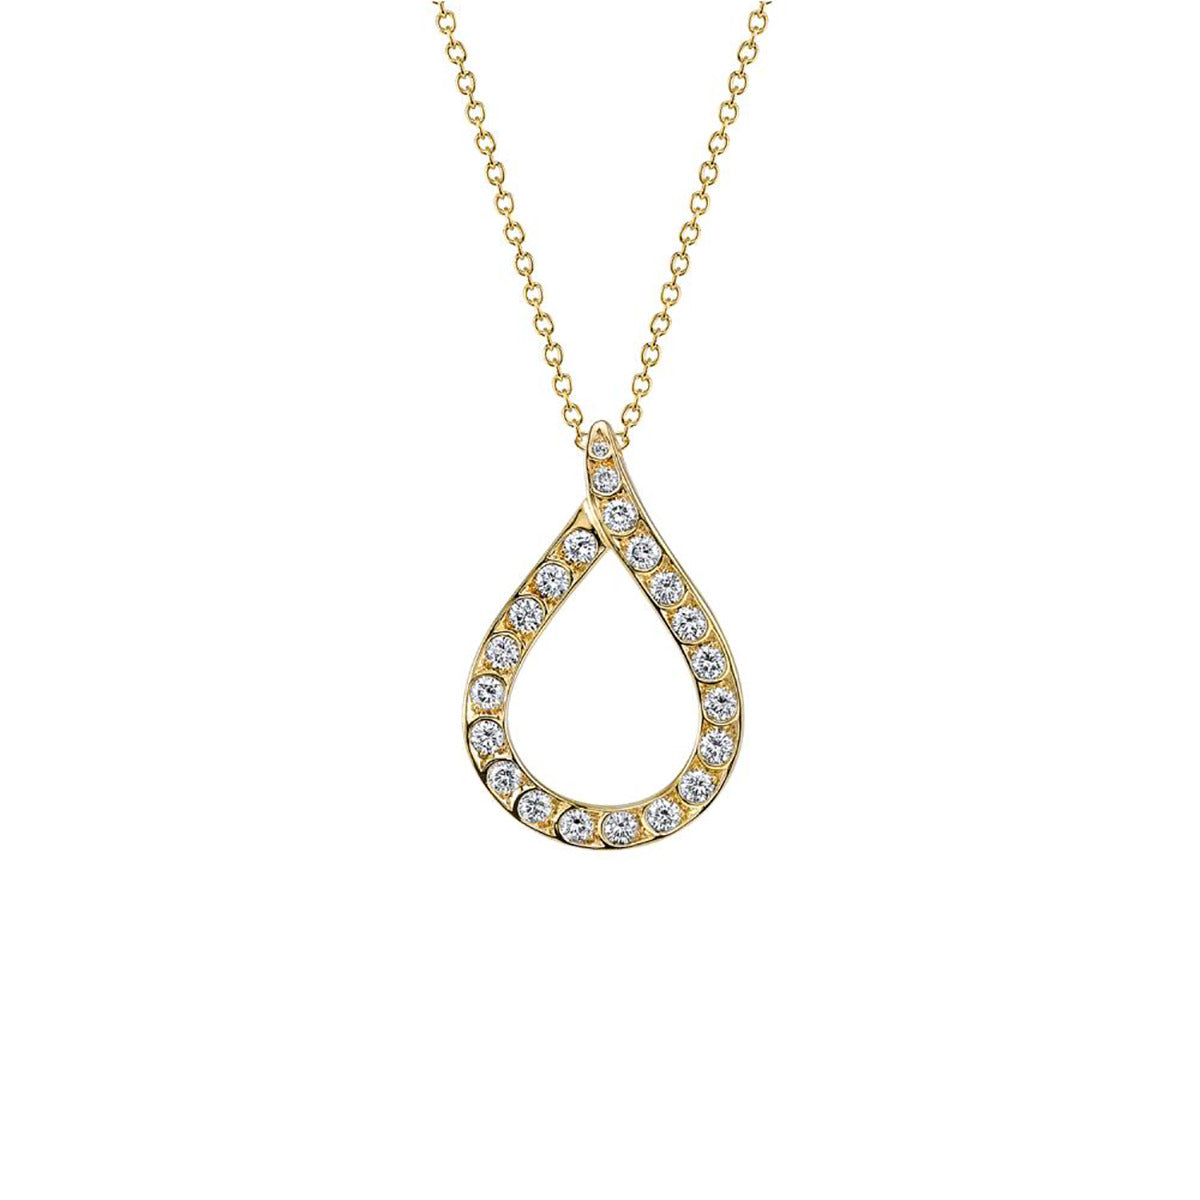 HARRY KOTLAR, Artisan Pave Diamond Teardrop Pendant Necklace